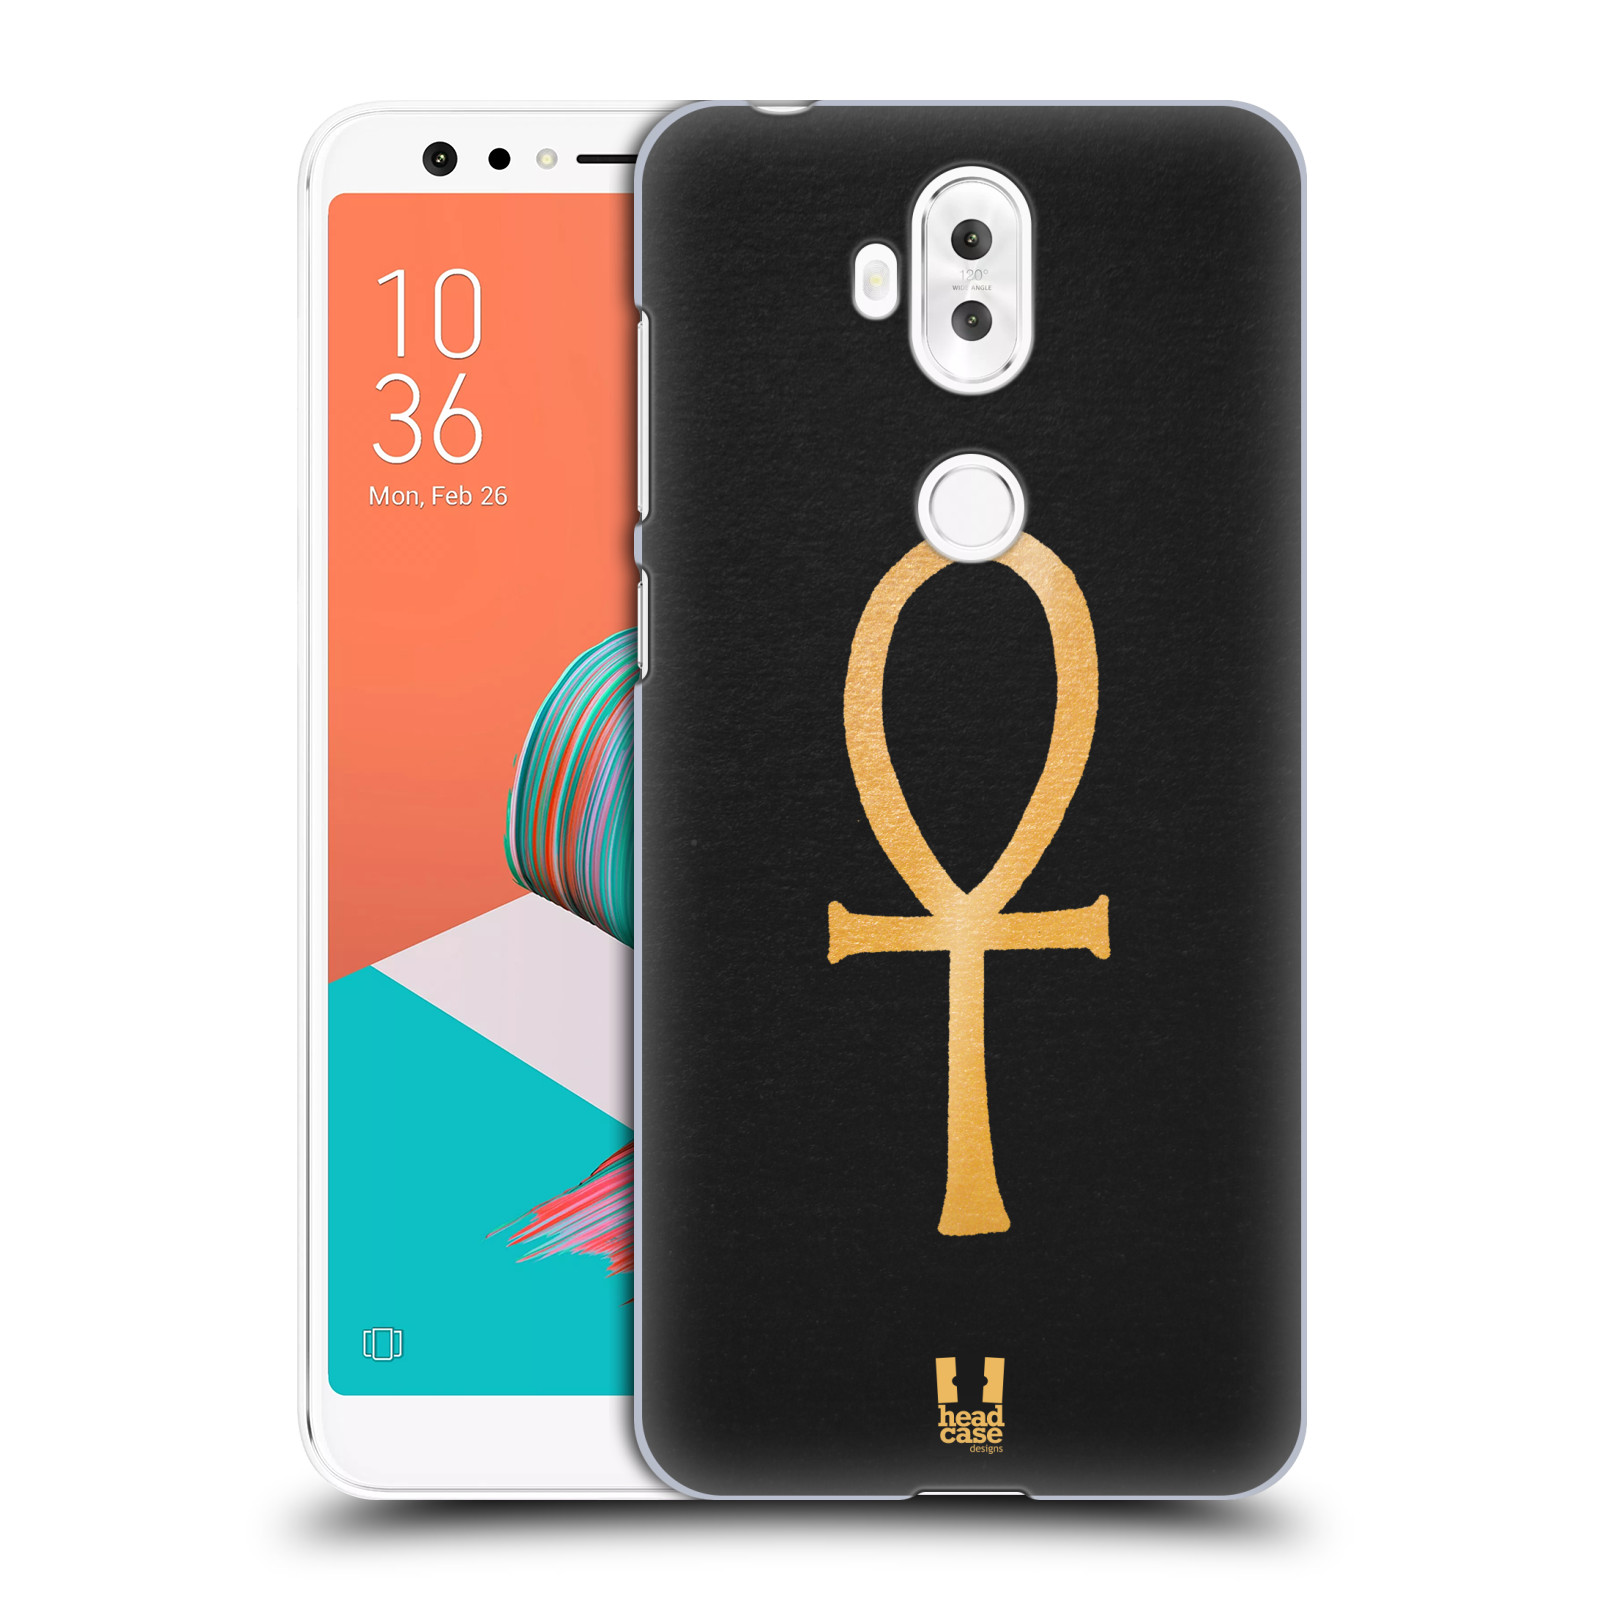 HEAD CASE plastový obal na mobil Asus Zenfone 5 LITE ZC600KL vzor EGYPT zlatá a černá SYMBOL ŽIVOTA